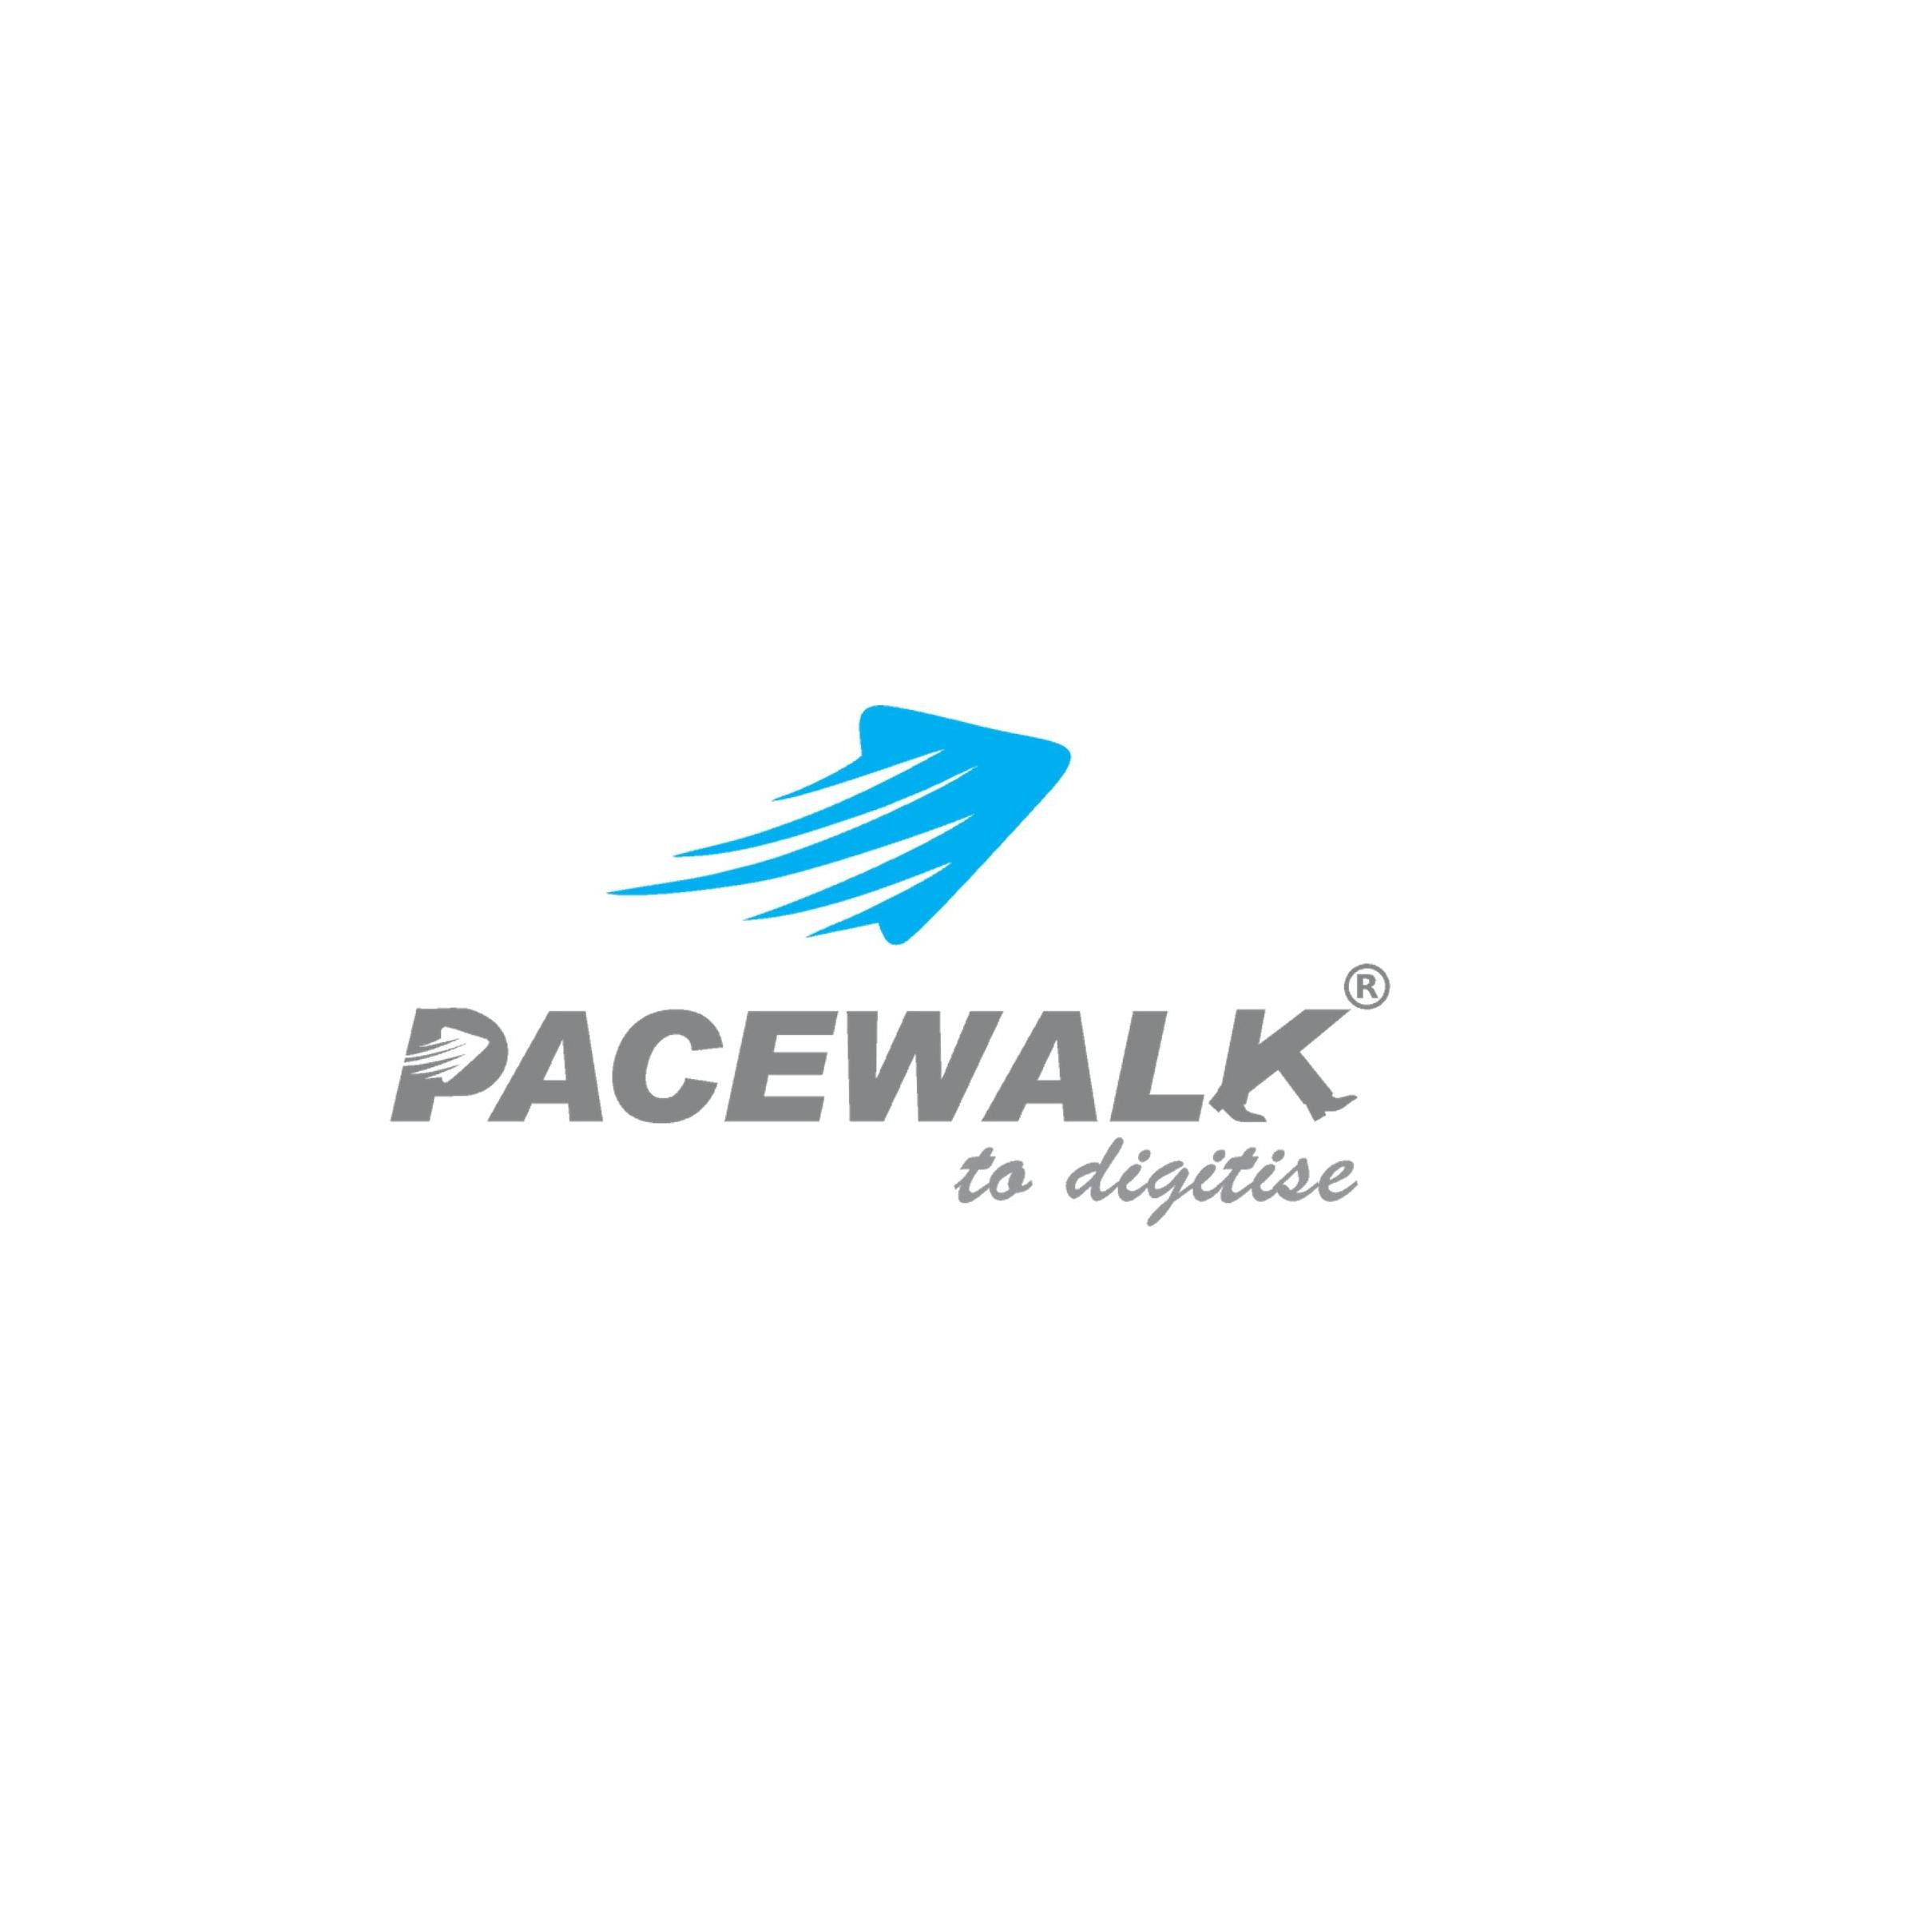 Pacewalk Digital